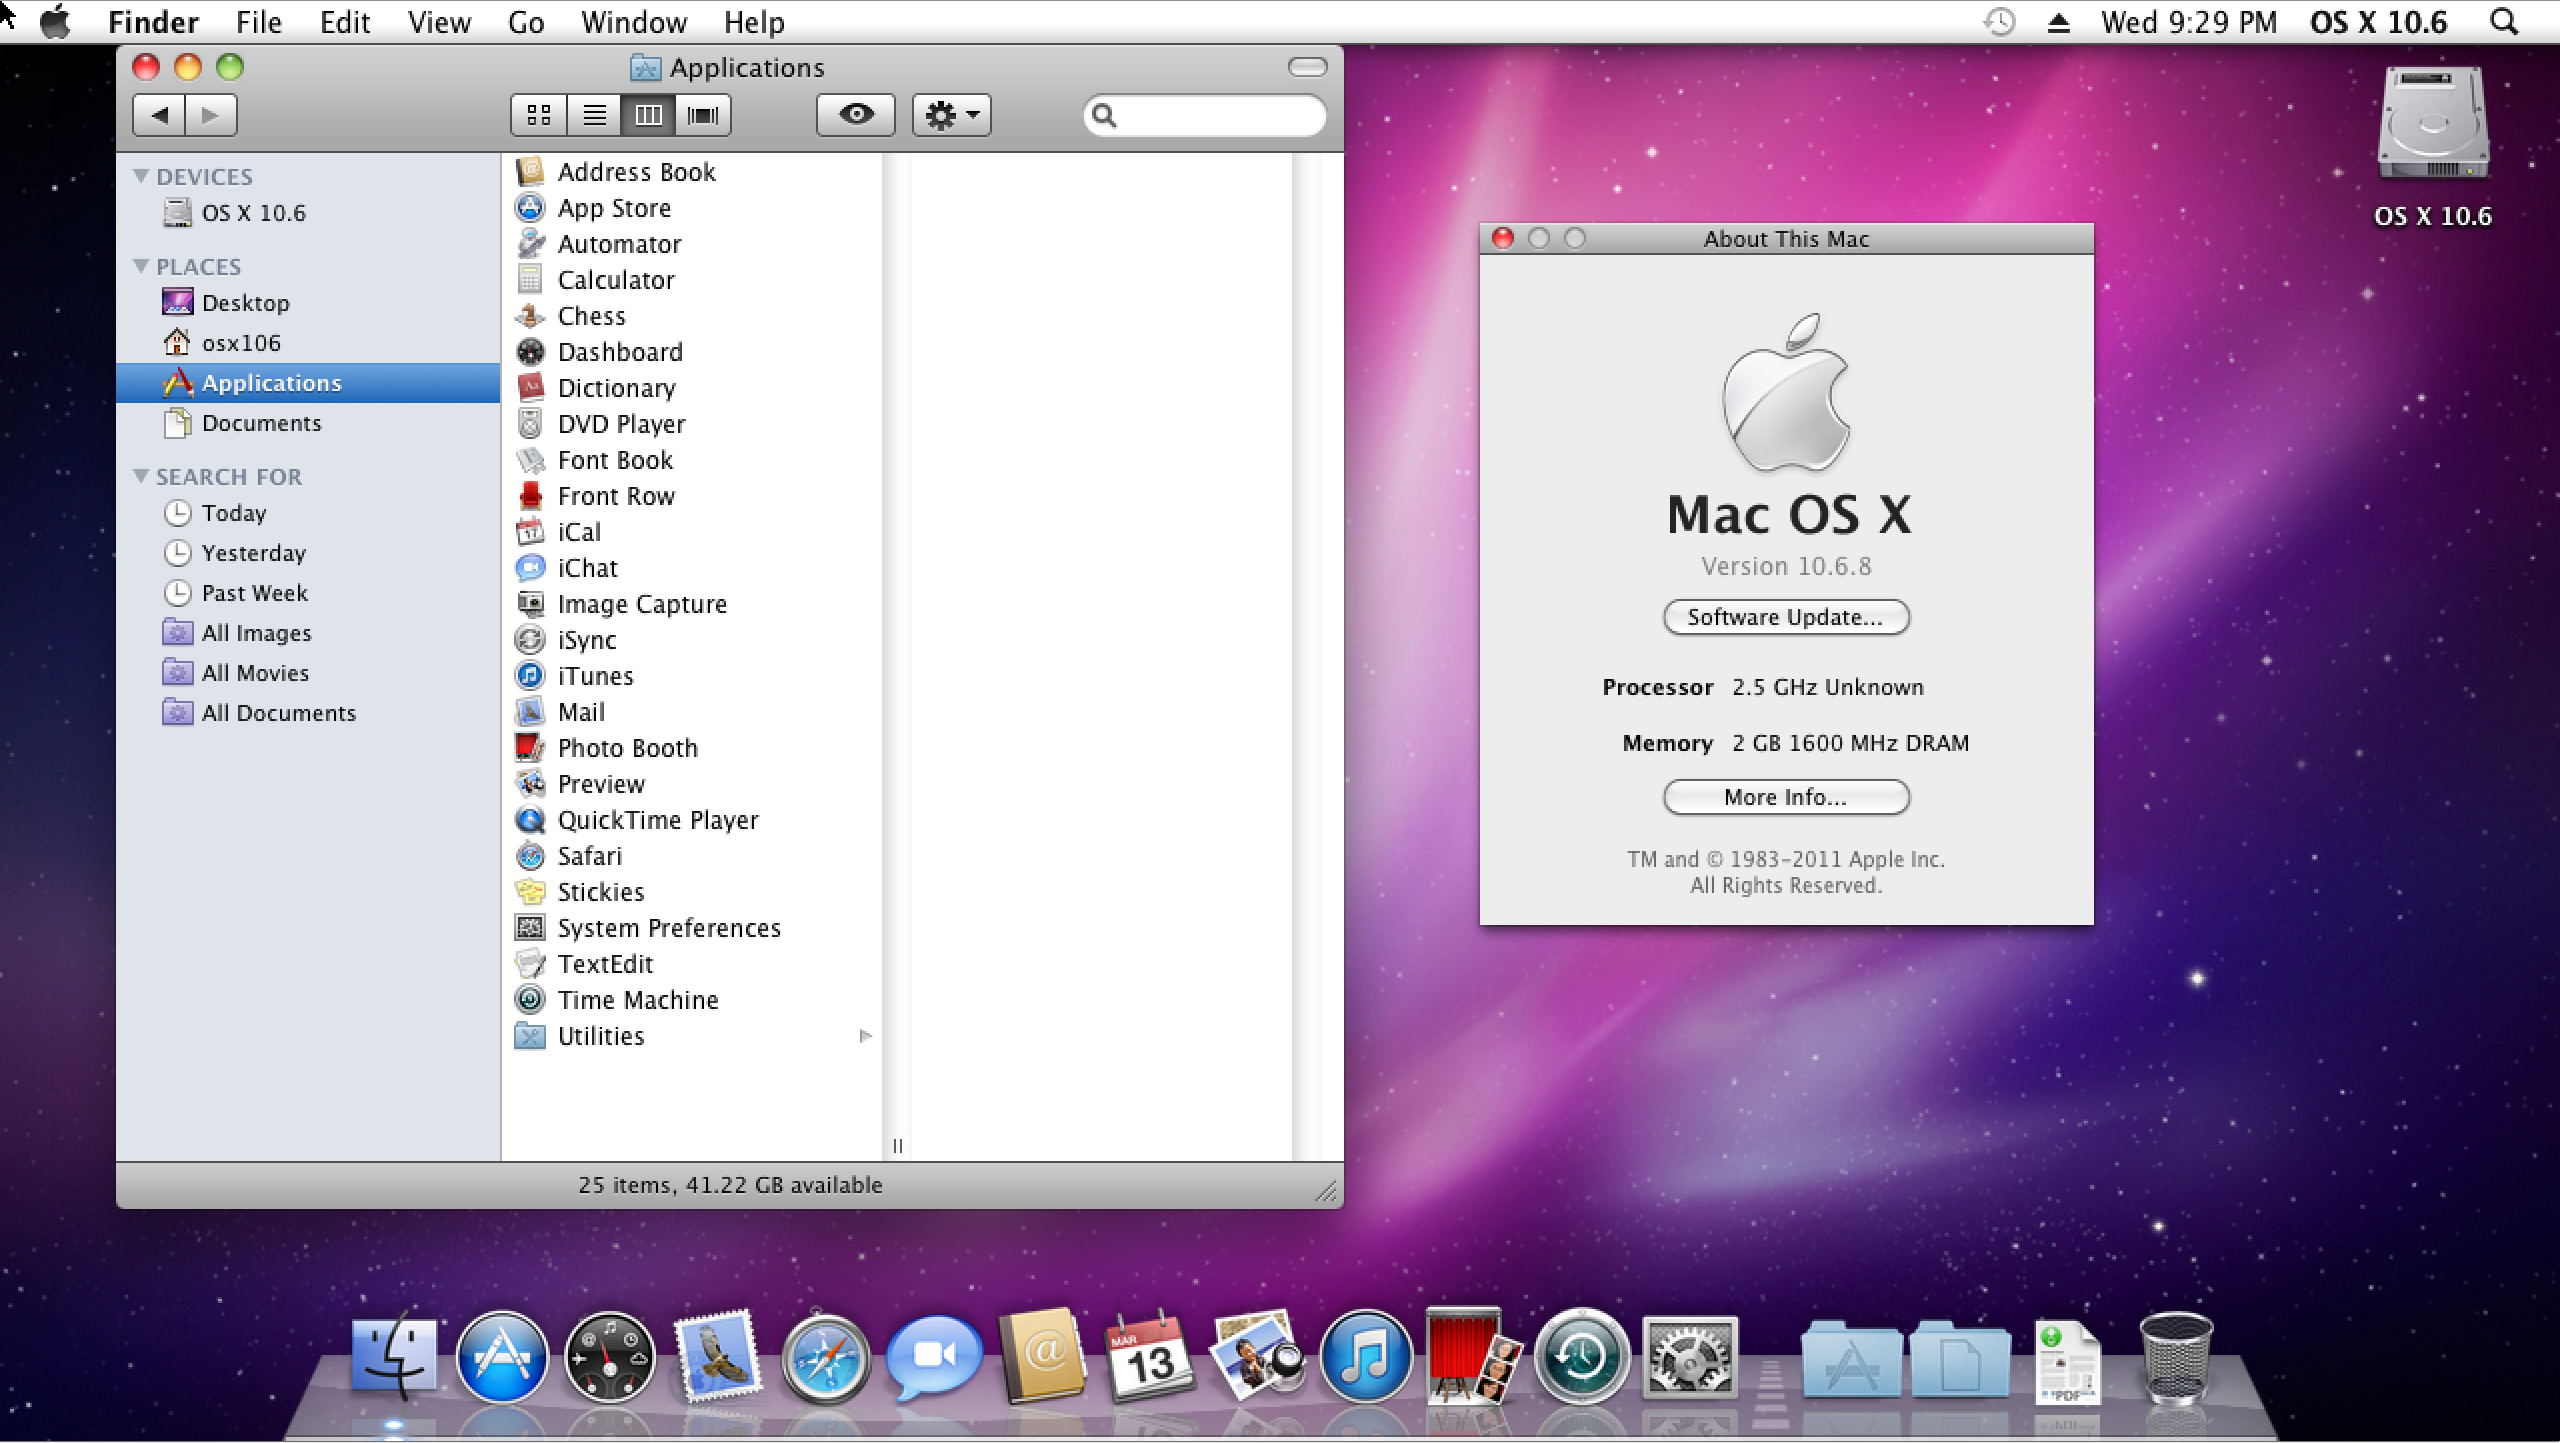 turbotax 2014 for mac os x 10.6.8